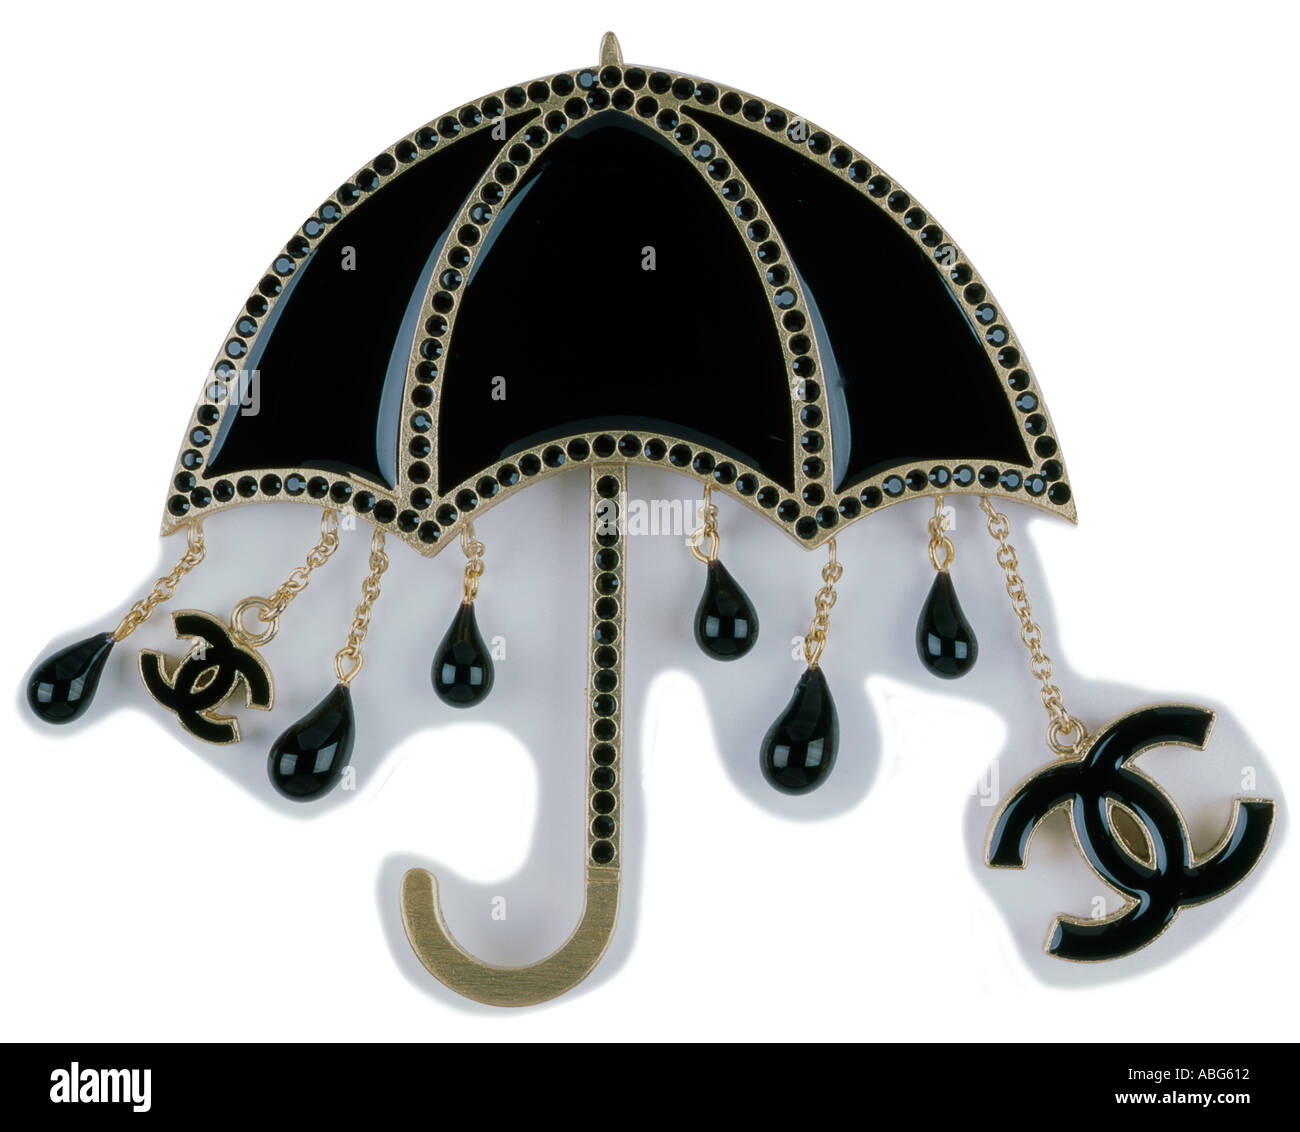 Chanel umbrella brooch or broach Stock Photo - Alamy